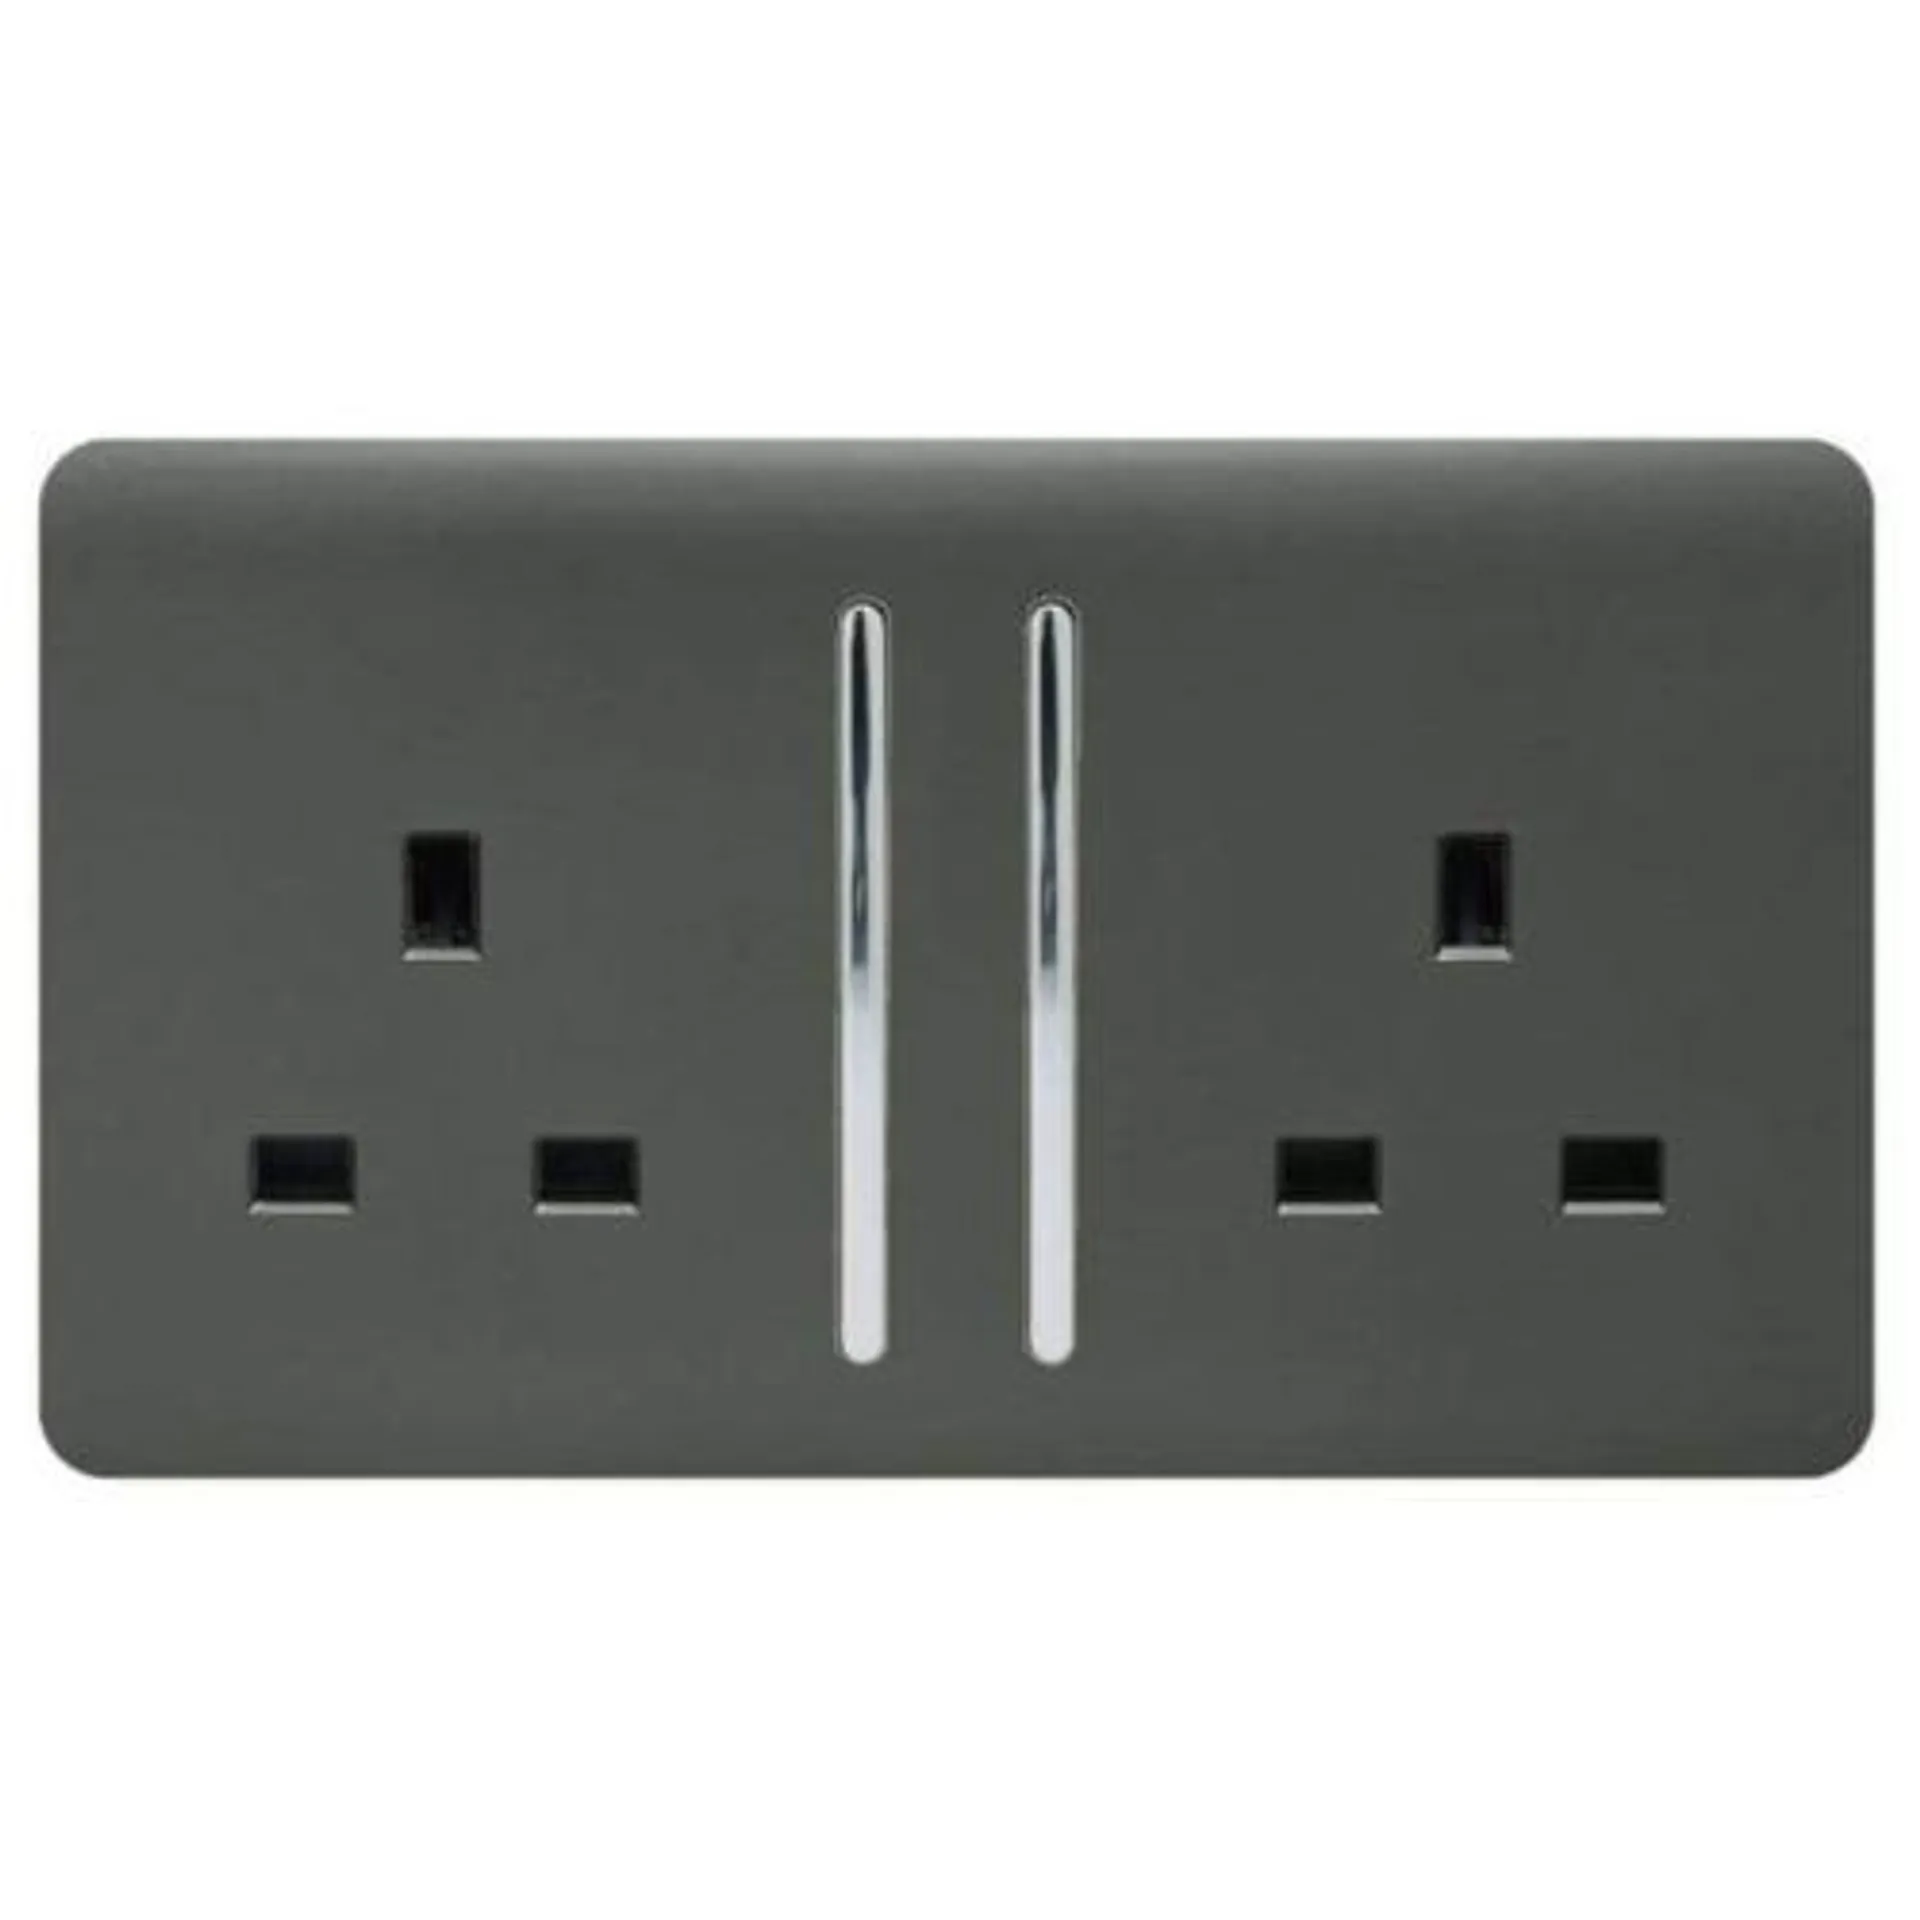 Trendi 2 Gang Long Switched Plug Socket 13amp - Charcoal Grey